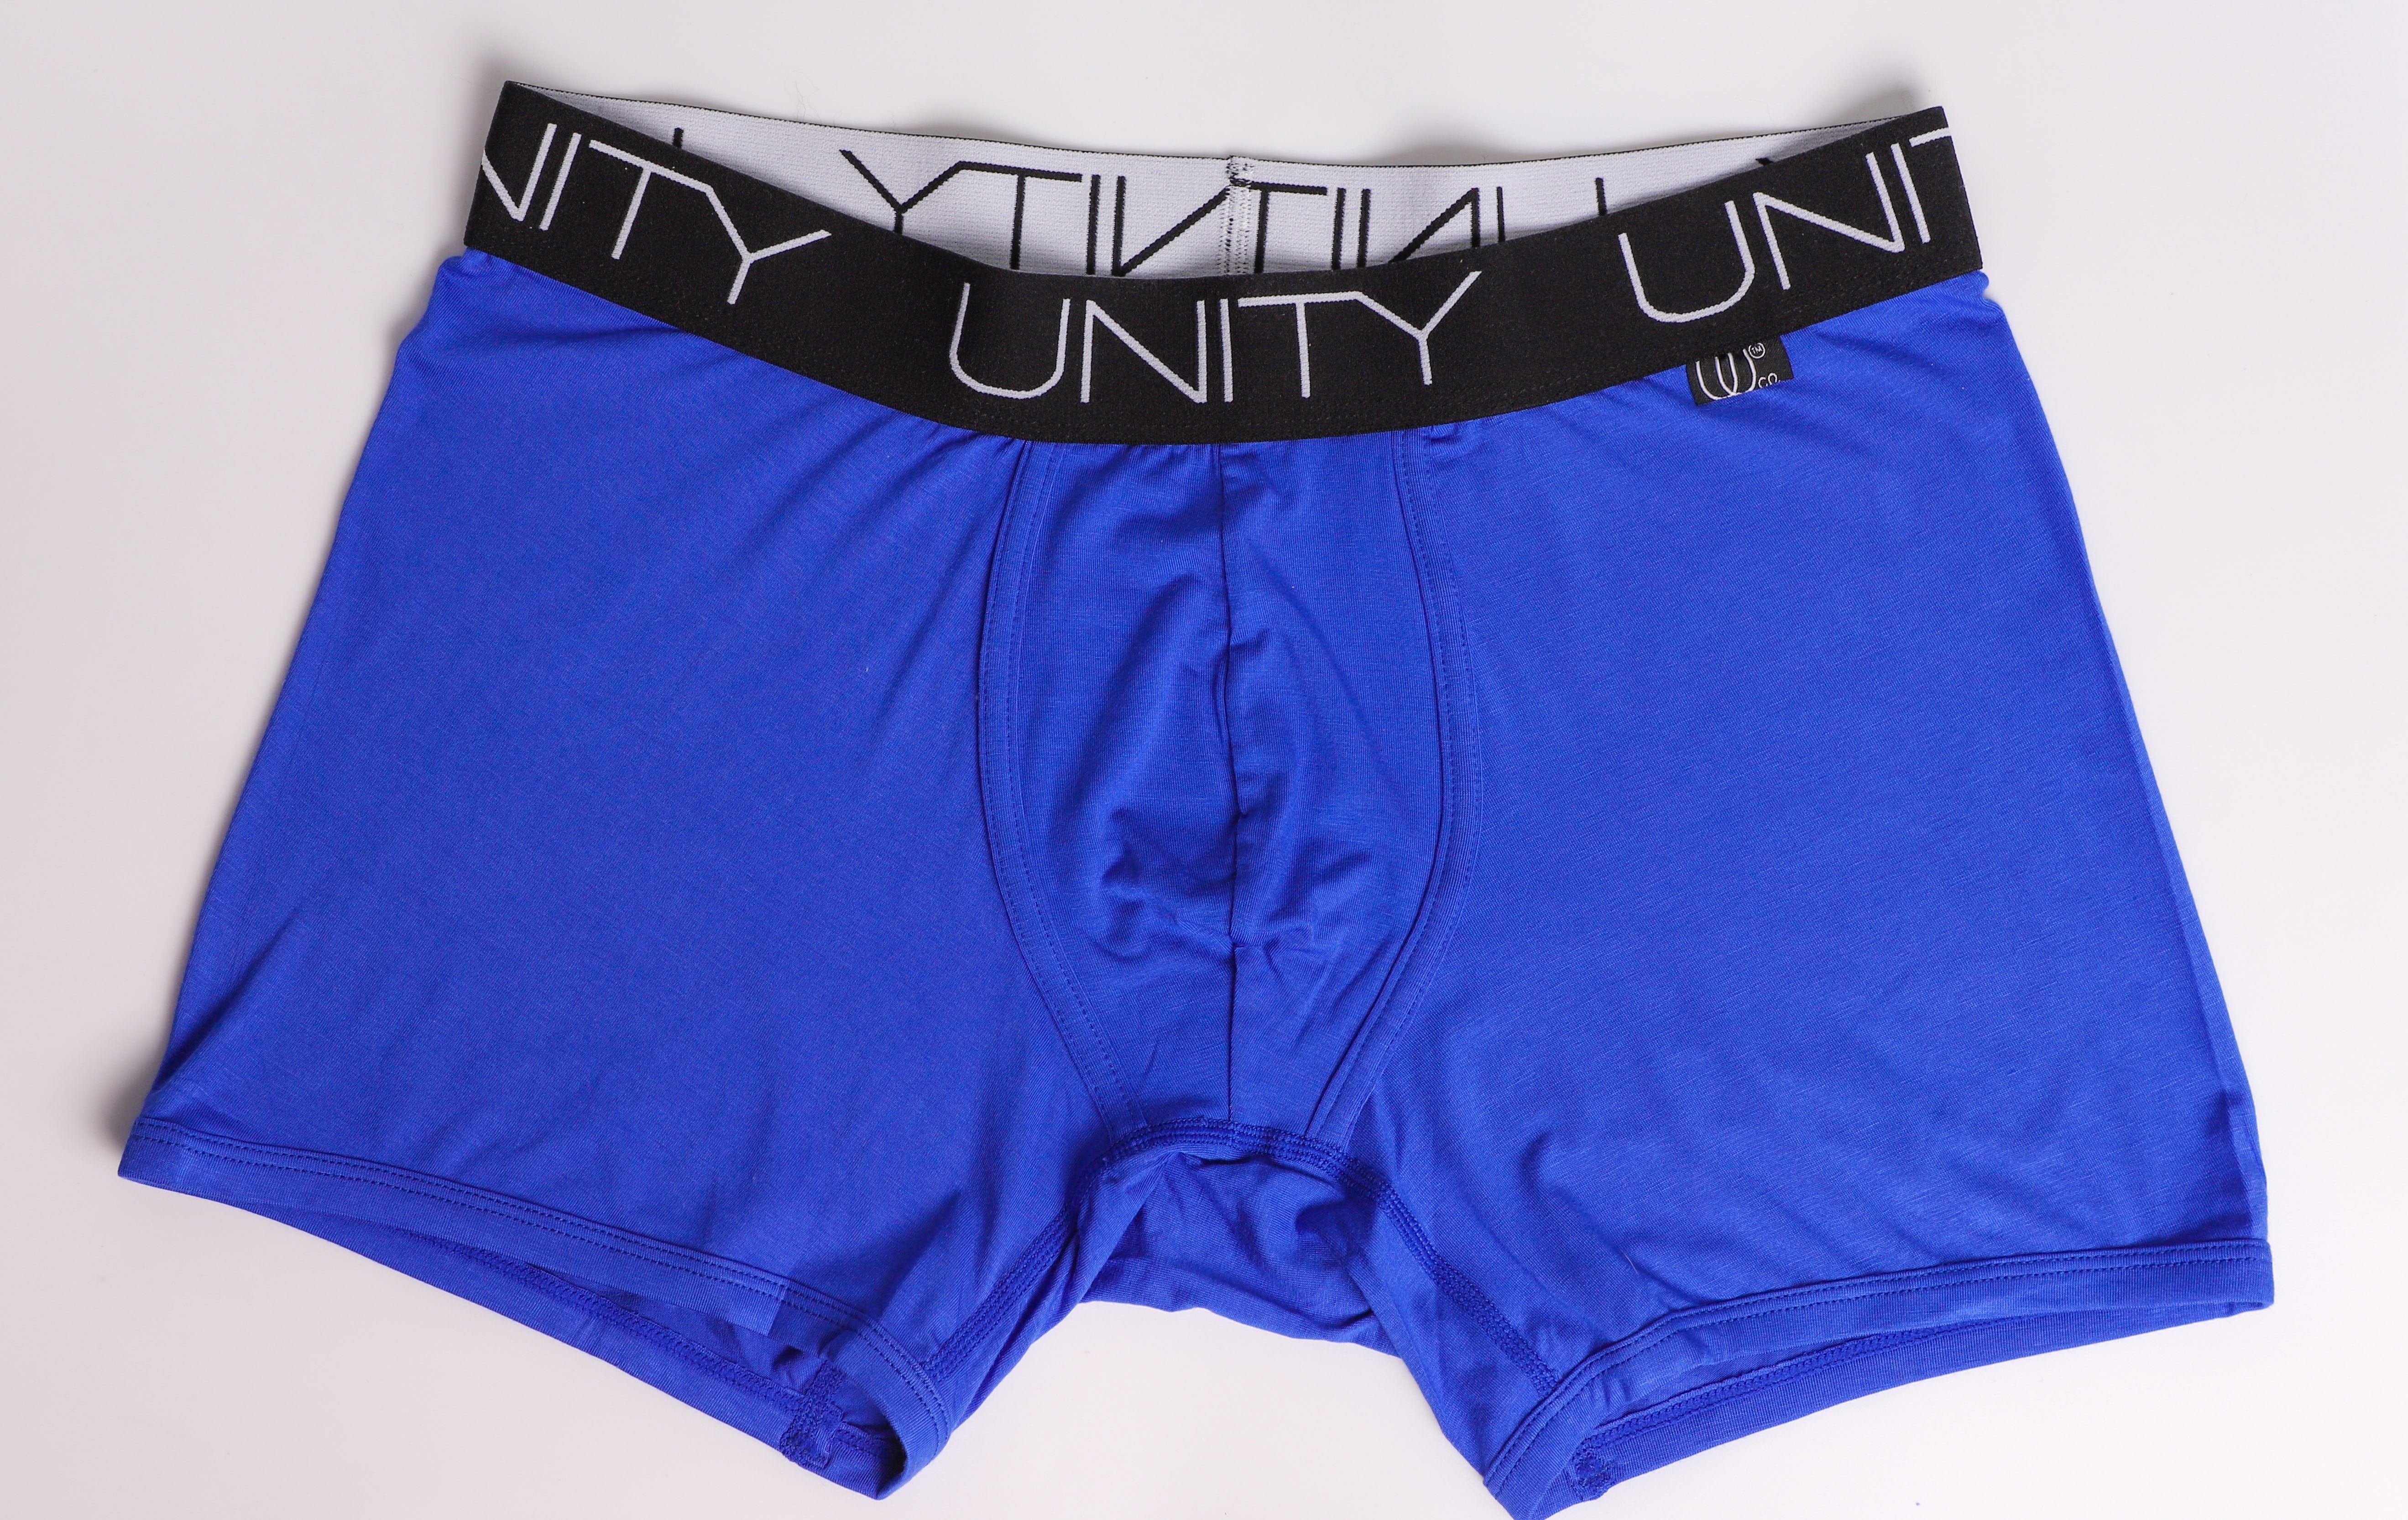 FASO FA1005 Premium Oragnic Cotton Brief Pack of 3 Men and Boys Underwear -  Ultrasoft Waistband - Comfortable - Eco-Friendly Royal Blue